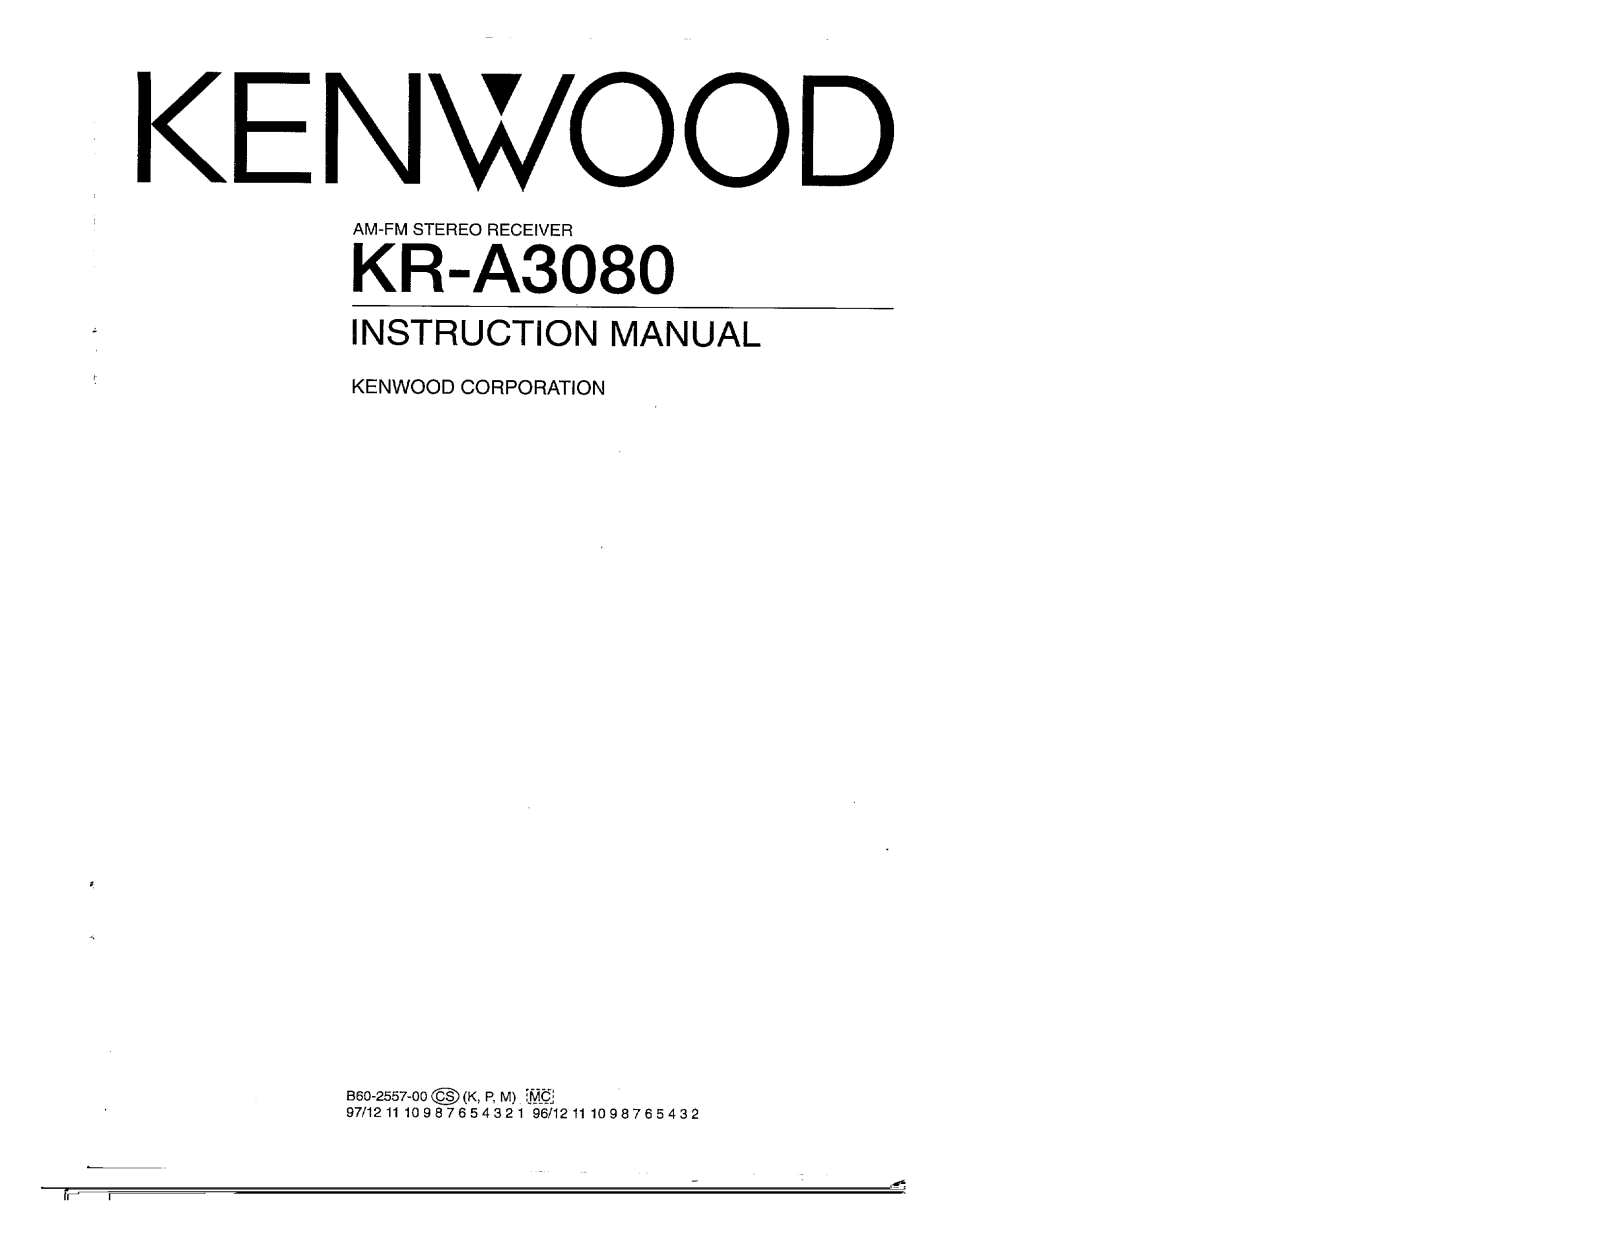 Kenwood KR-A3080 Owner's Manual